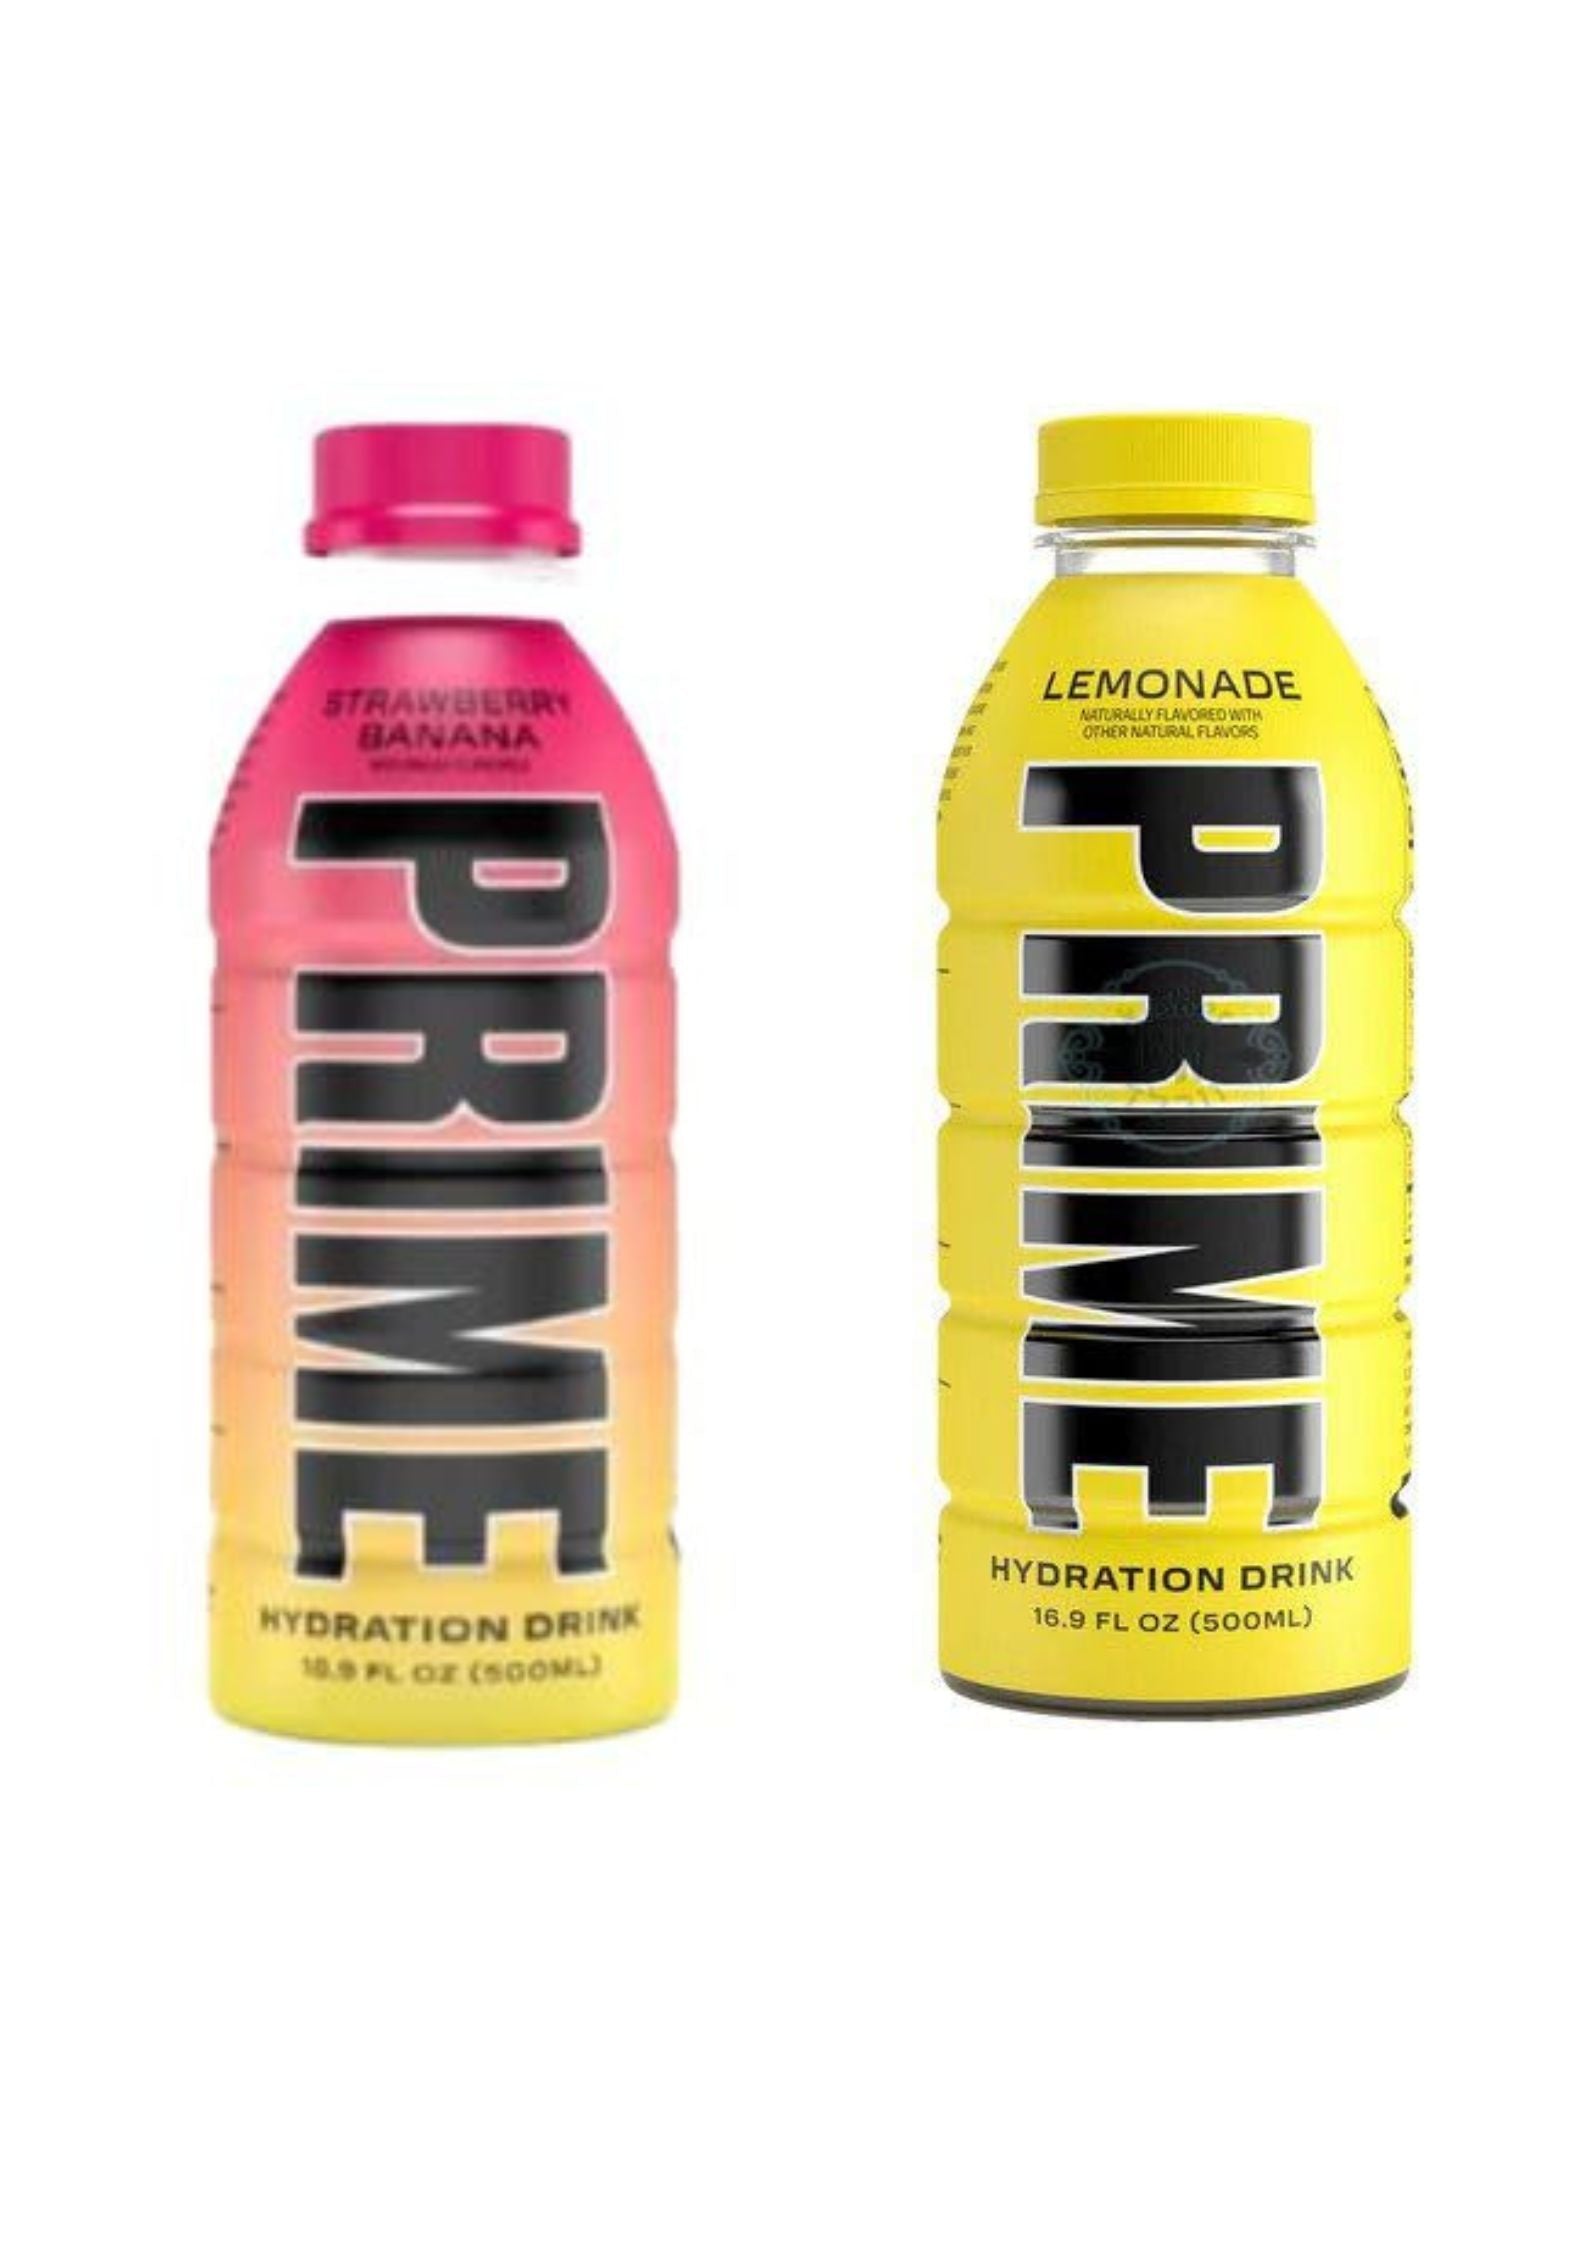 Prime Hydration Drink Strawberry Banana X Lemonade Bundles